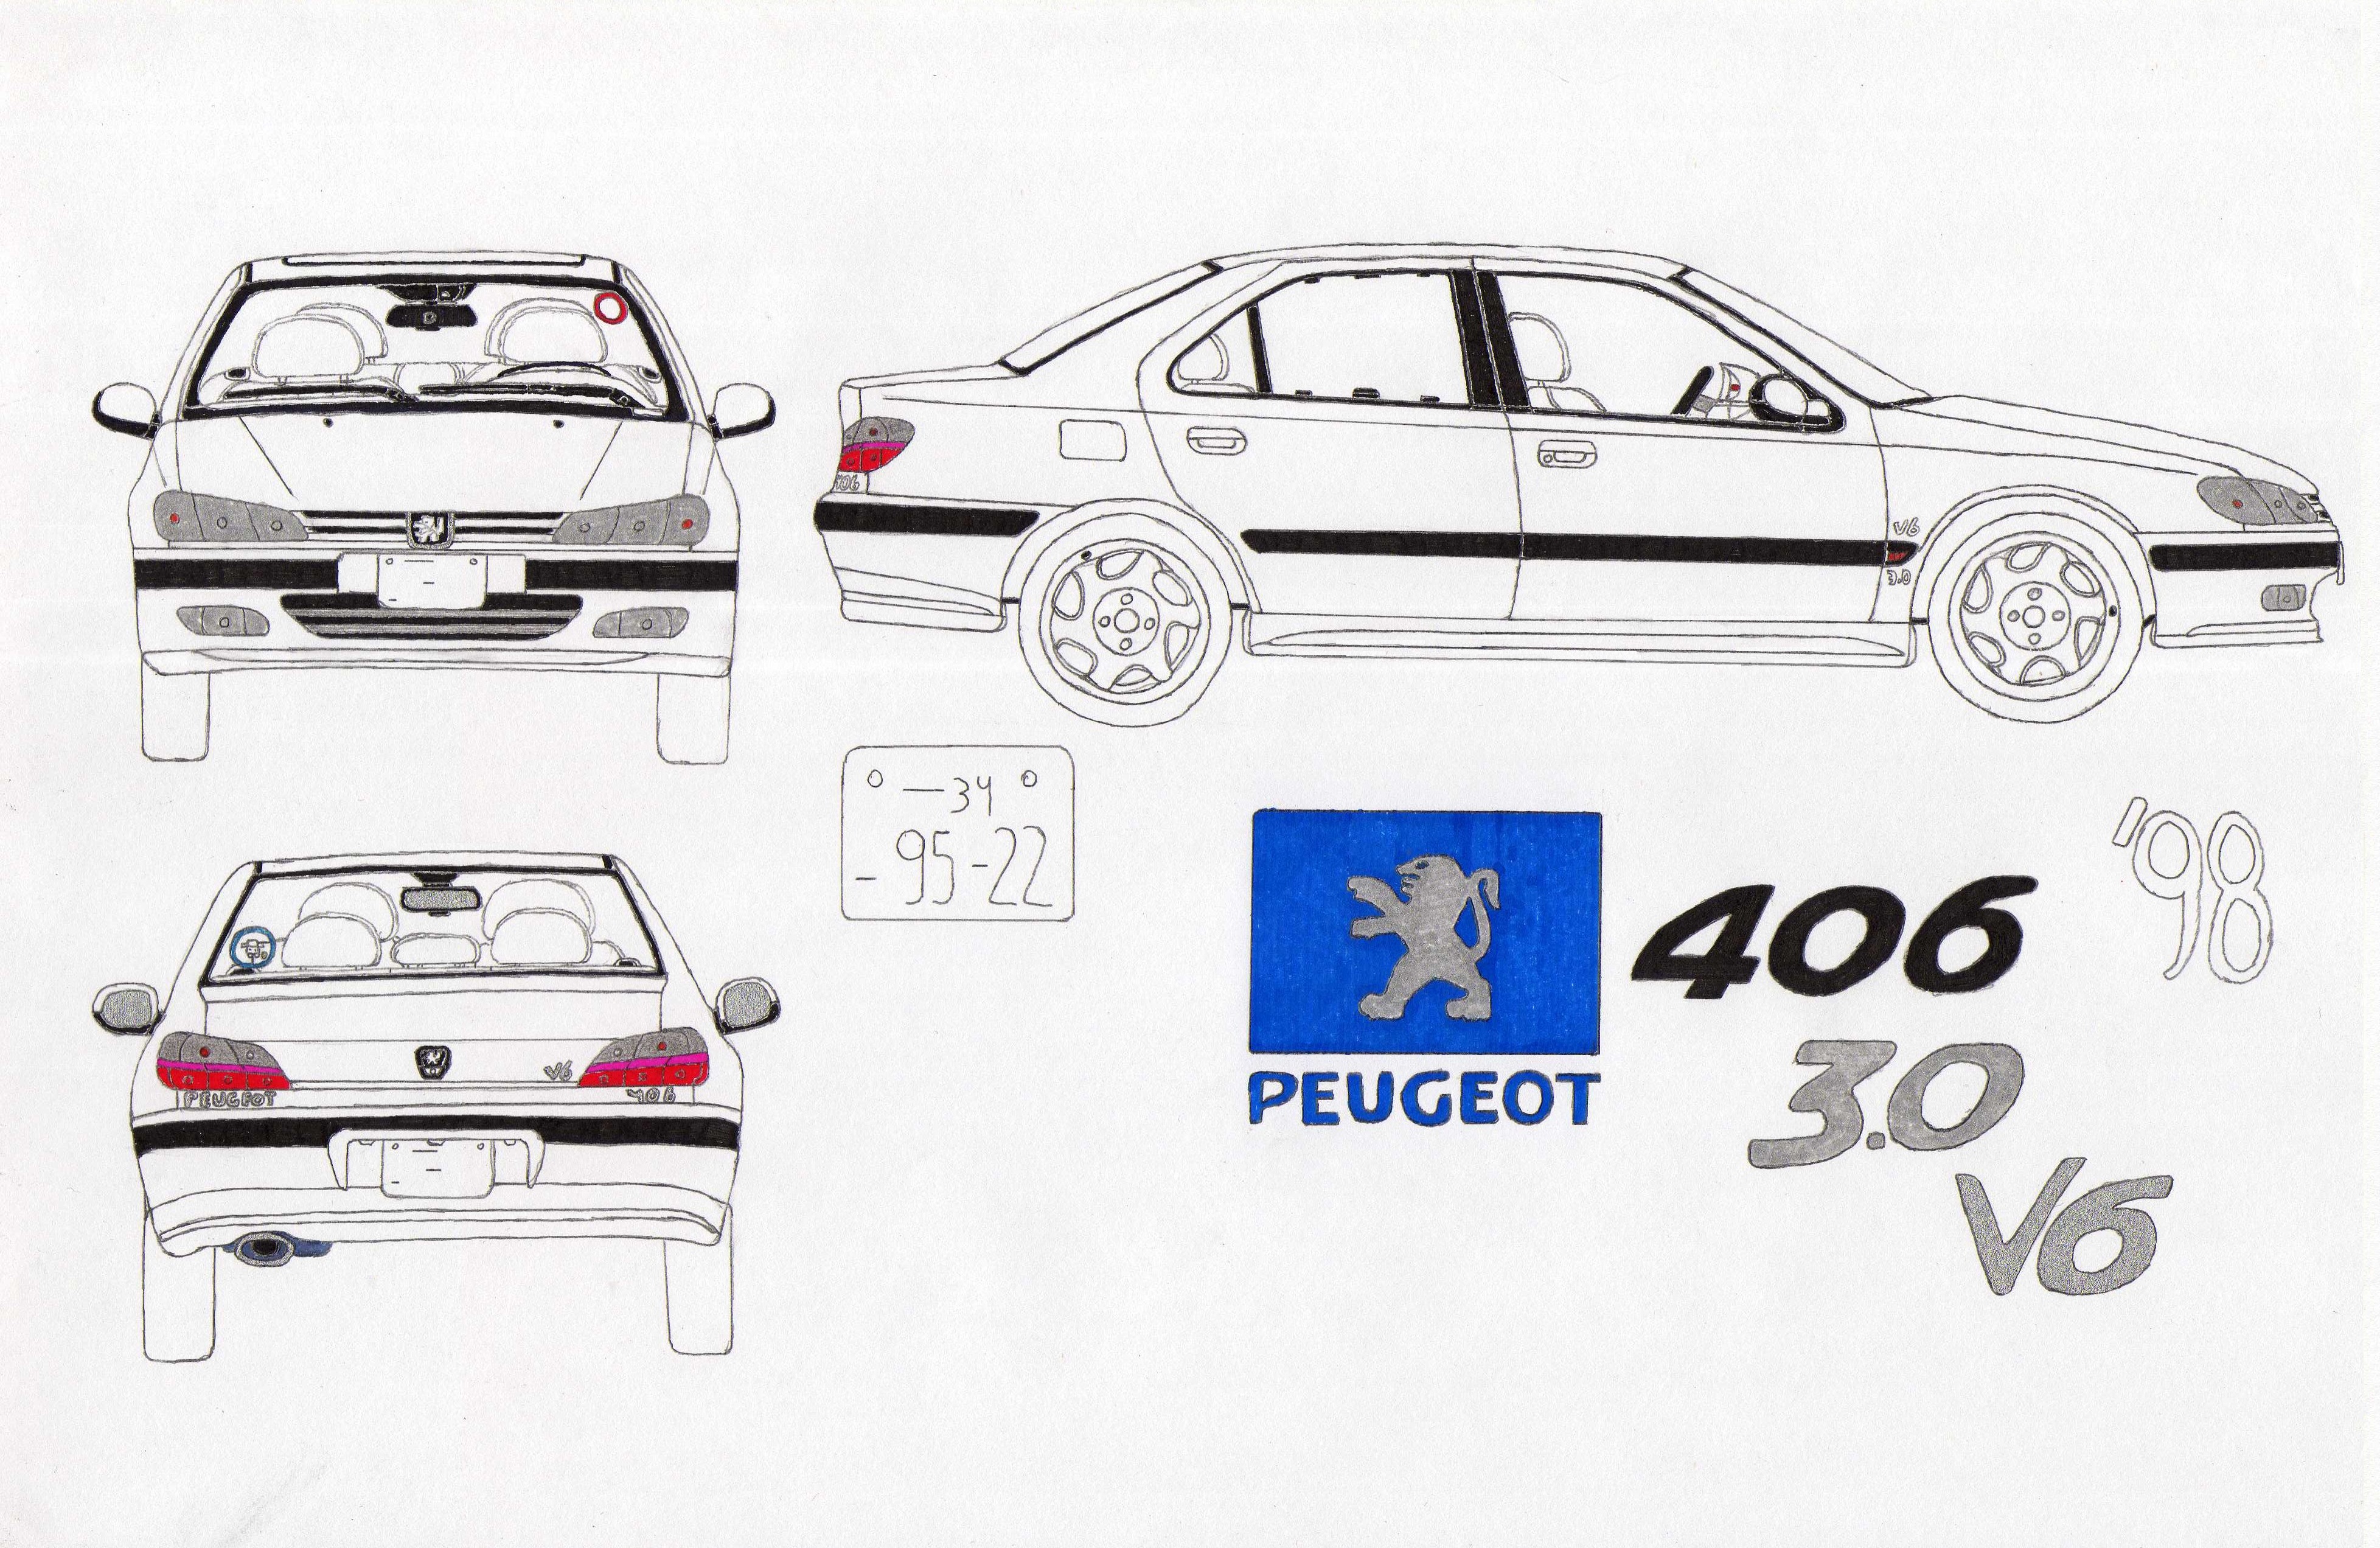 Peugeot 406 V6 sedan 1998 finished draw by integraldraws on DeviantArt